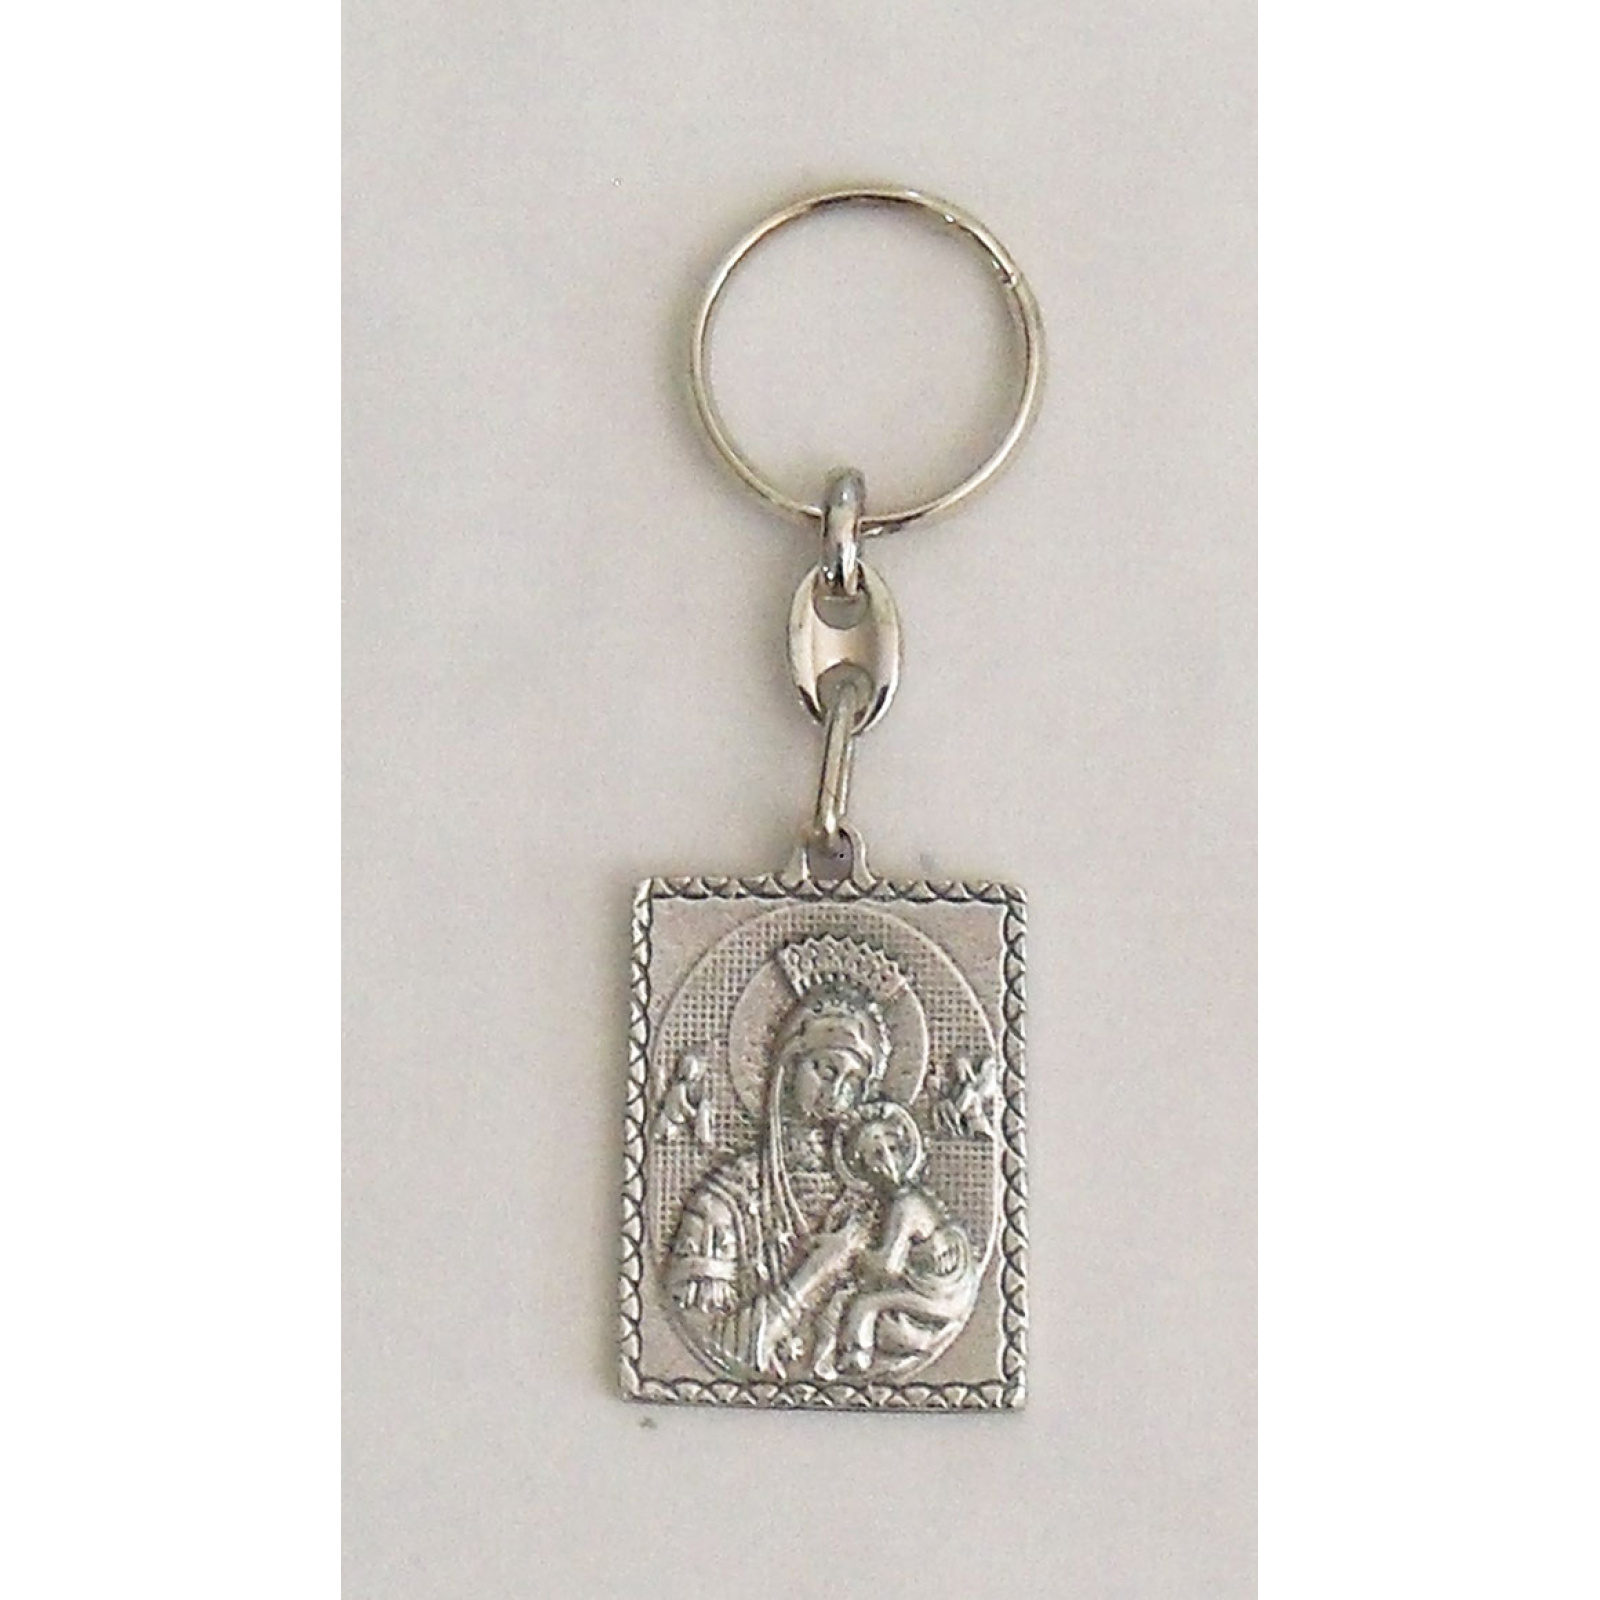 Madonna and child keychain byzantine style